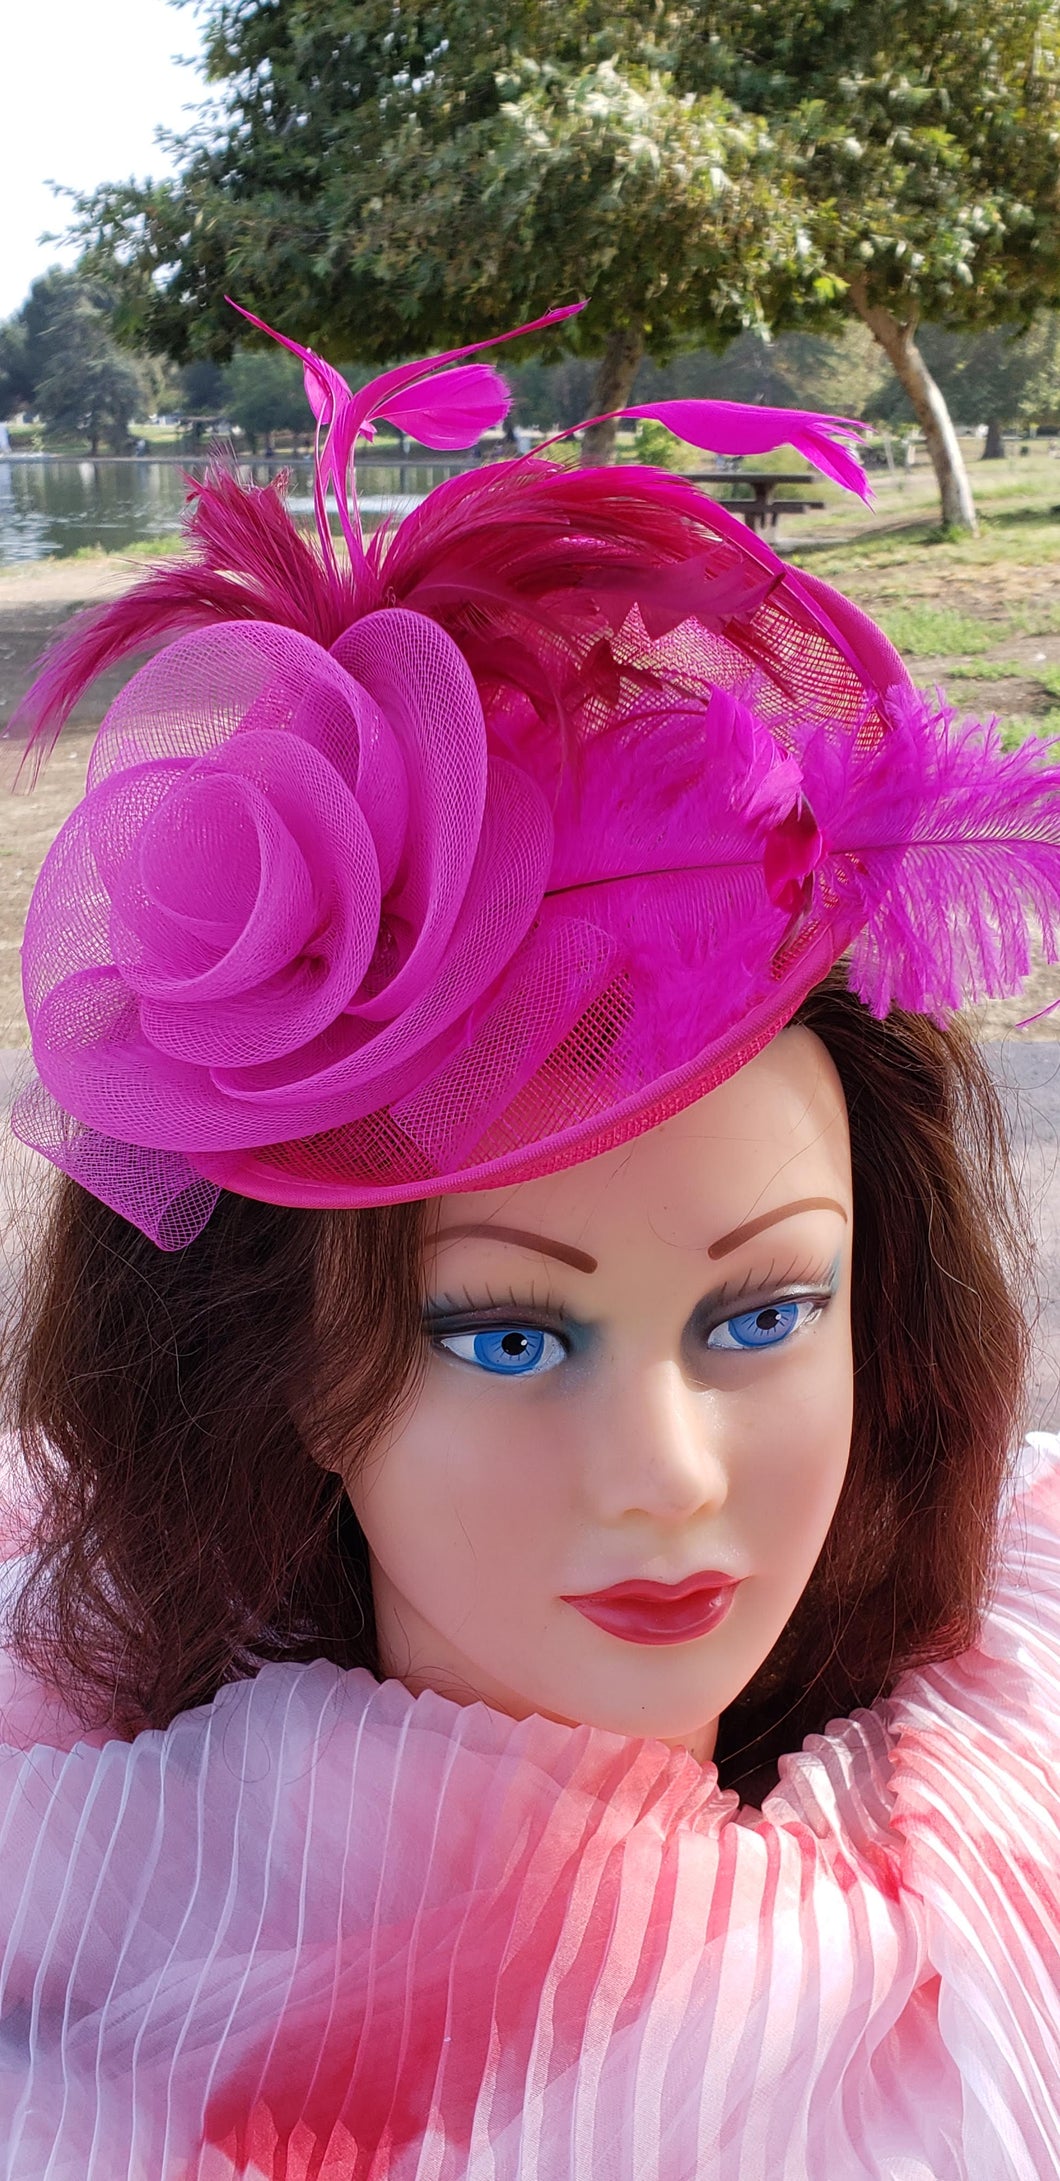 Hot Pink Wedding Church  Party Fascinator Hat.Feather Bridal Wedding Hair Clip Head Accessory. Bridal Derby Fascinator hat.Headpiece